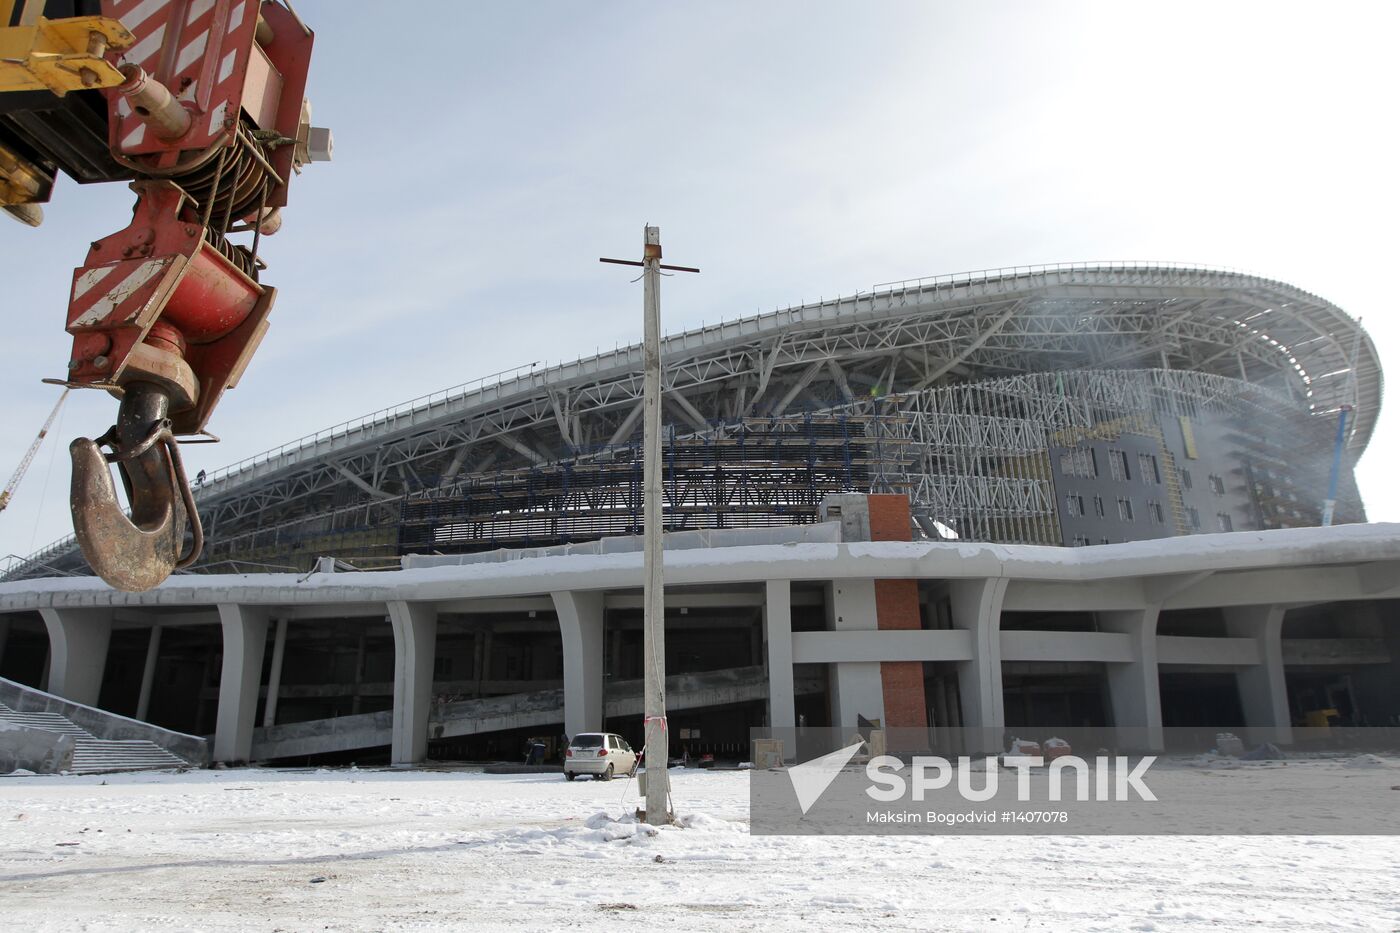 Construction of Universiade 2013 sports facilities